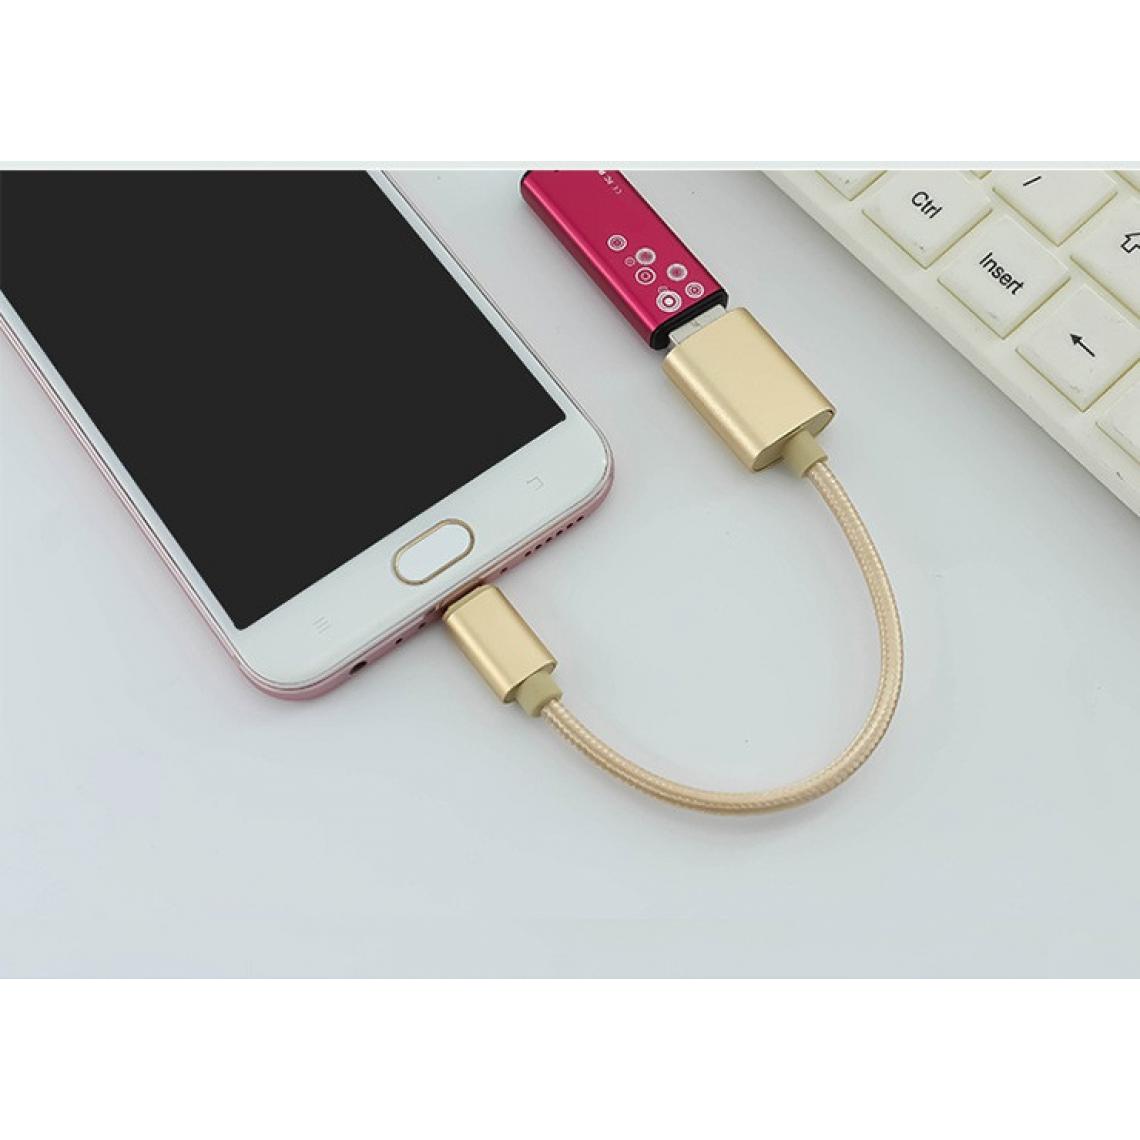 Shot - Adaptateur Type C/USB pour SAMSUNG Galaxy S9 Smartphone & MAC USB-C Clef (OR) - Autres accessoires smartphone